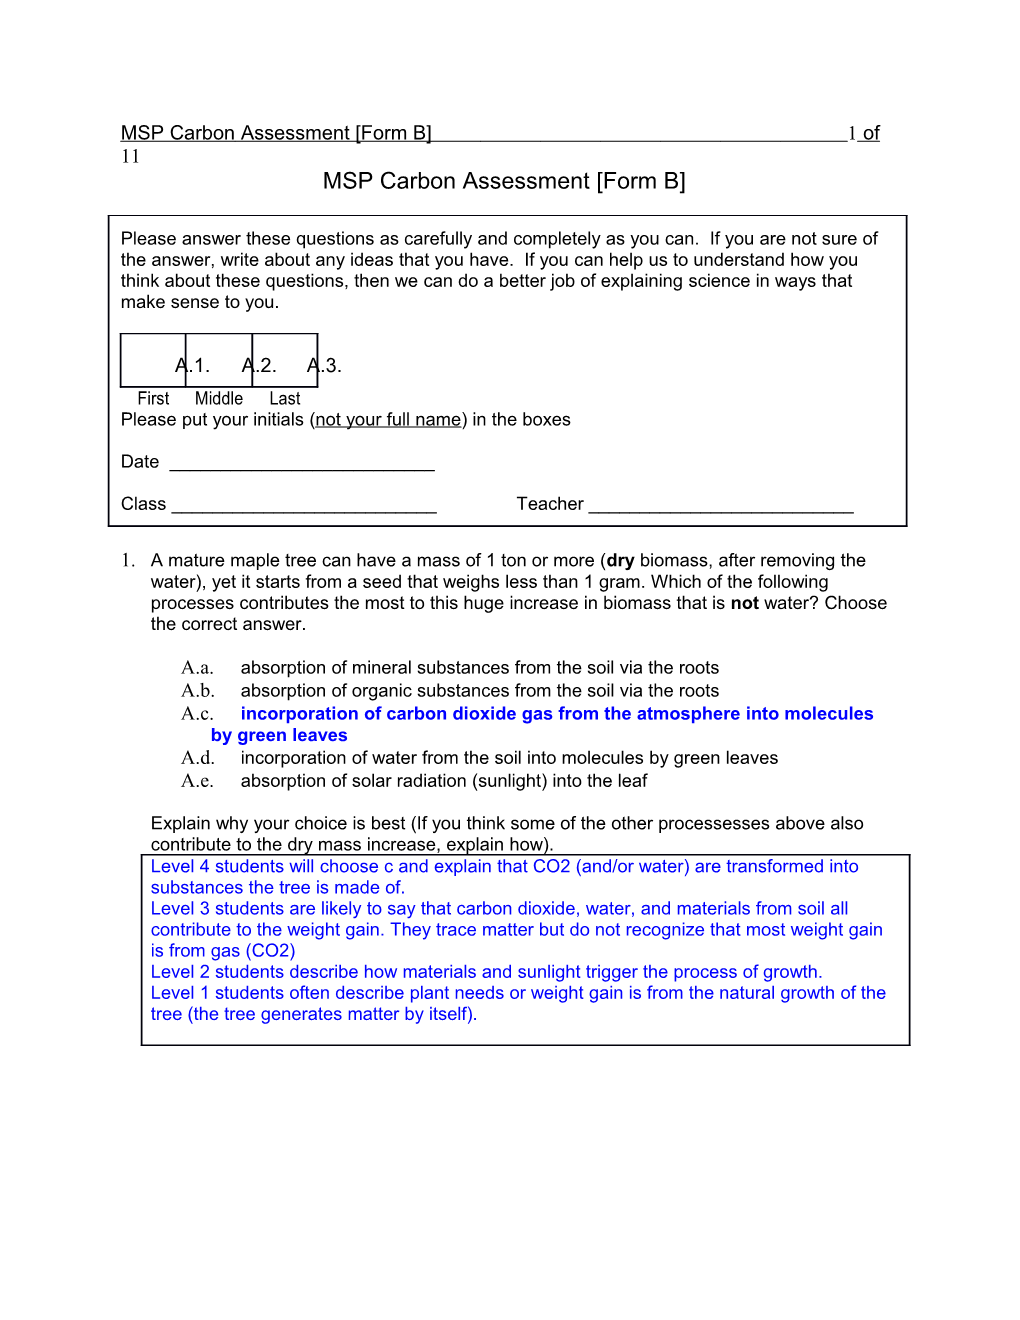 MSP Carbon Assessment Form B 10 of 10